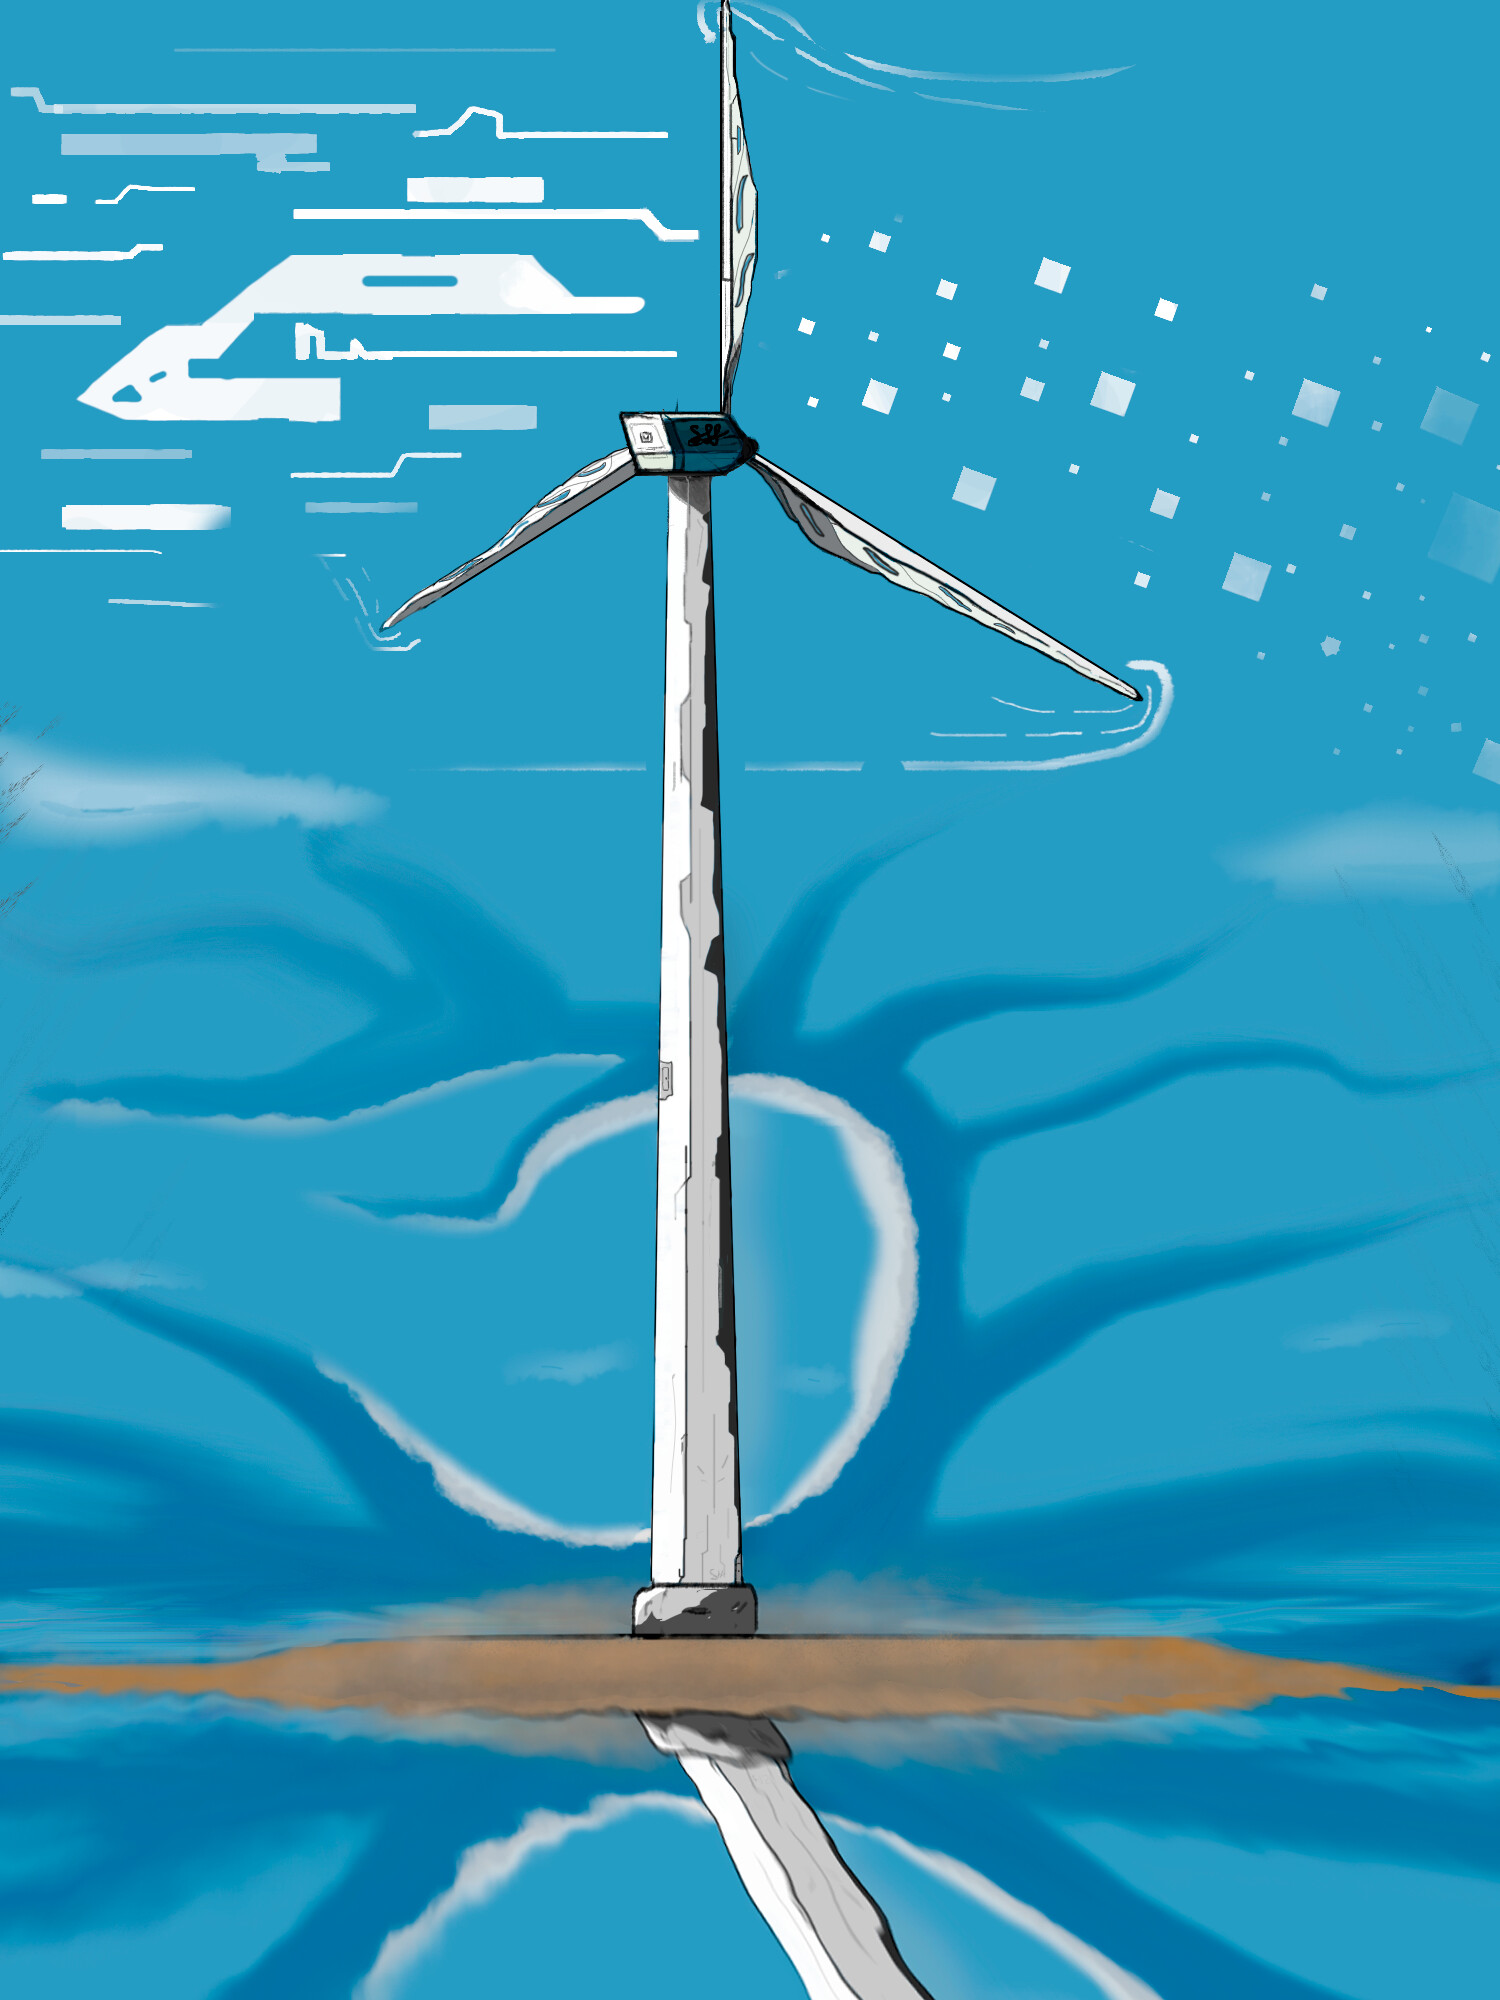 ArtStation - Wind generator on shore